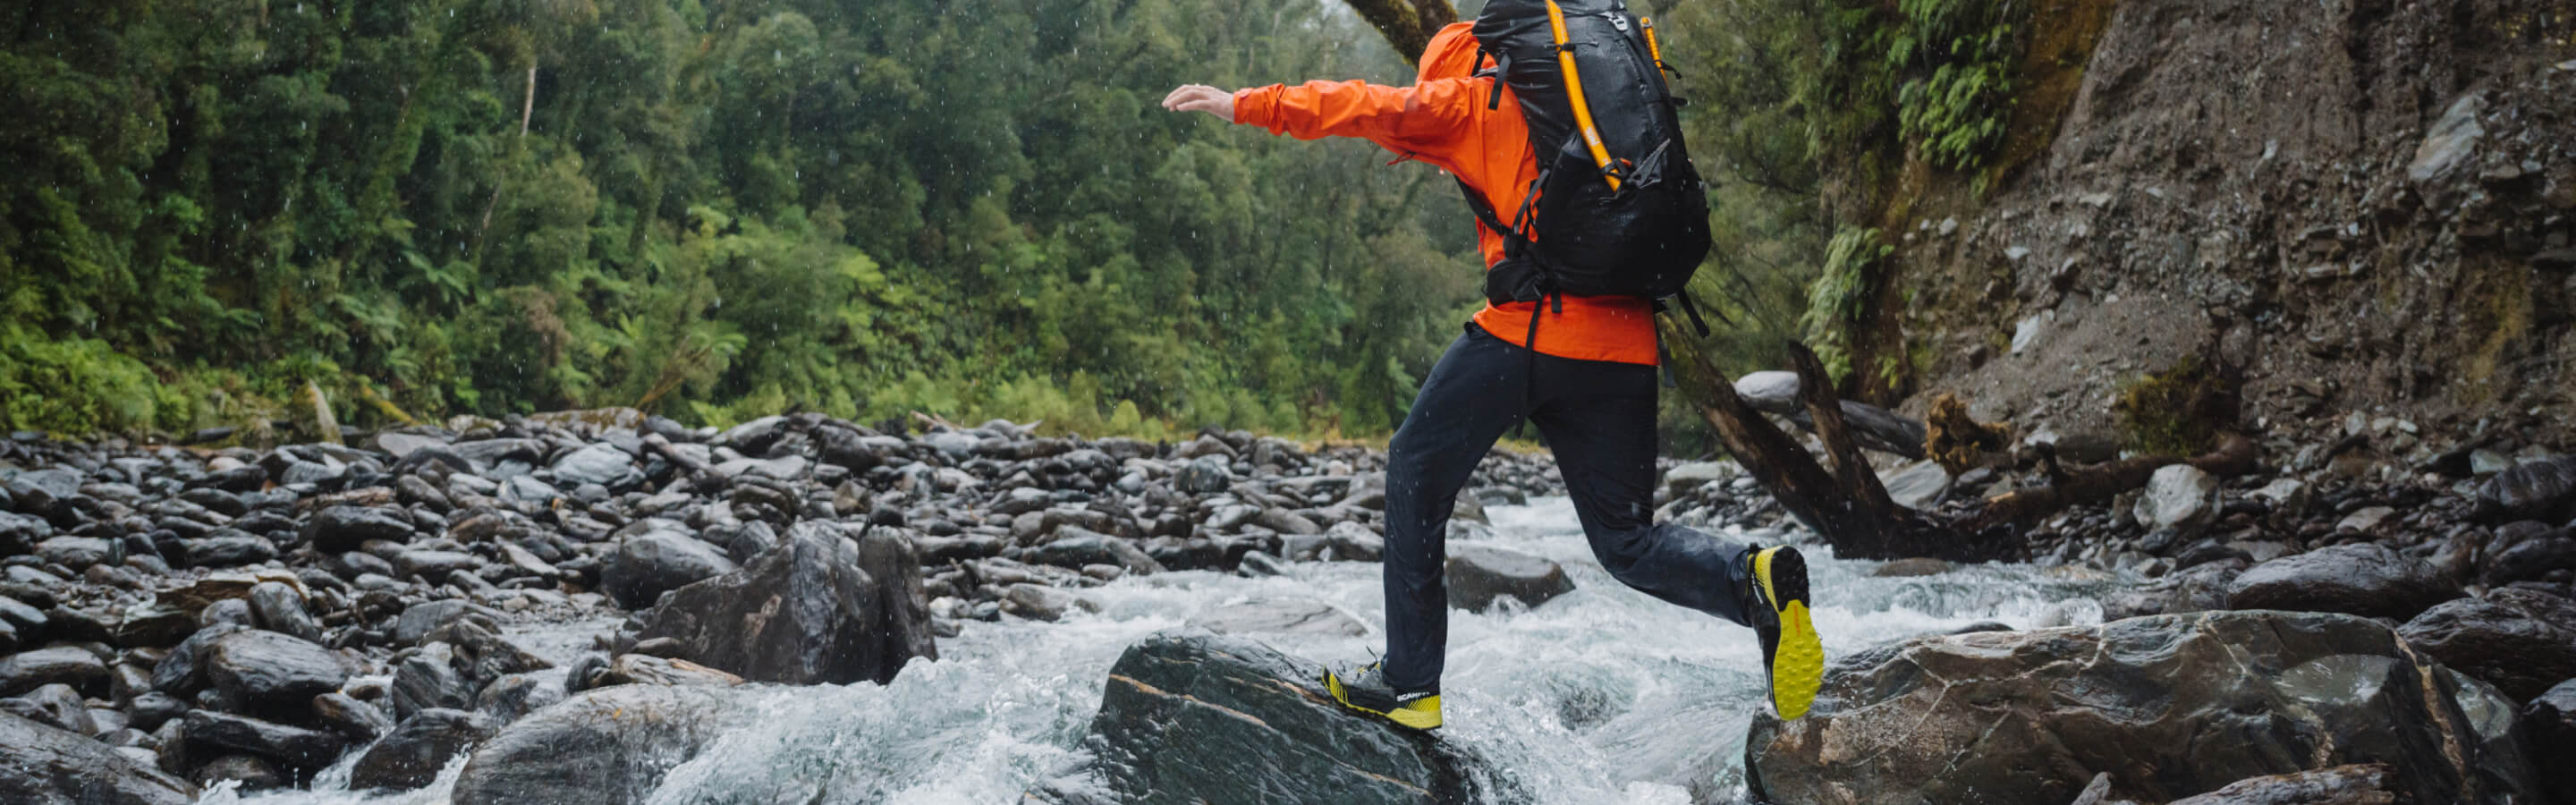 Person in orange rain jacket crossing rugged river